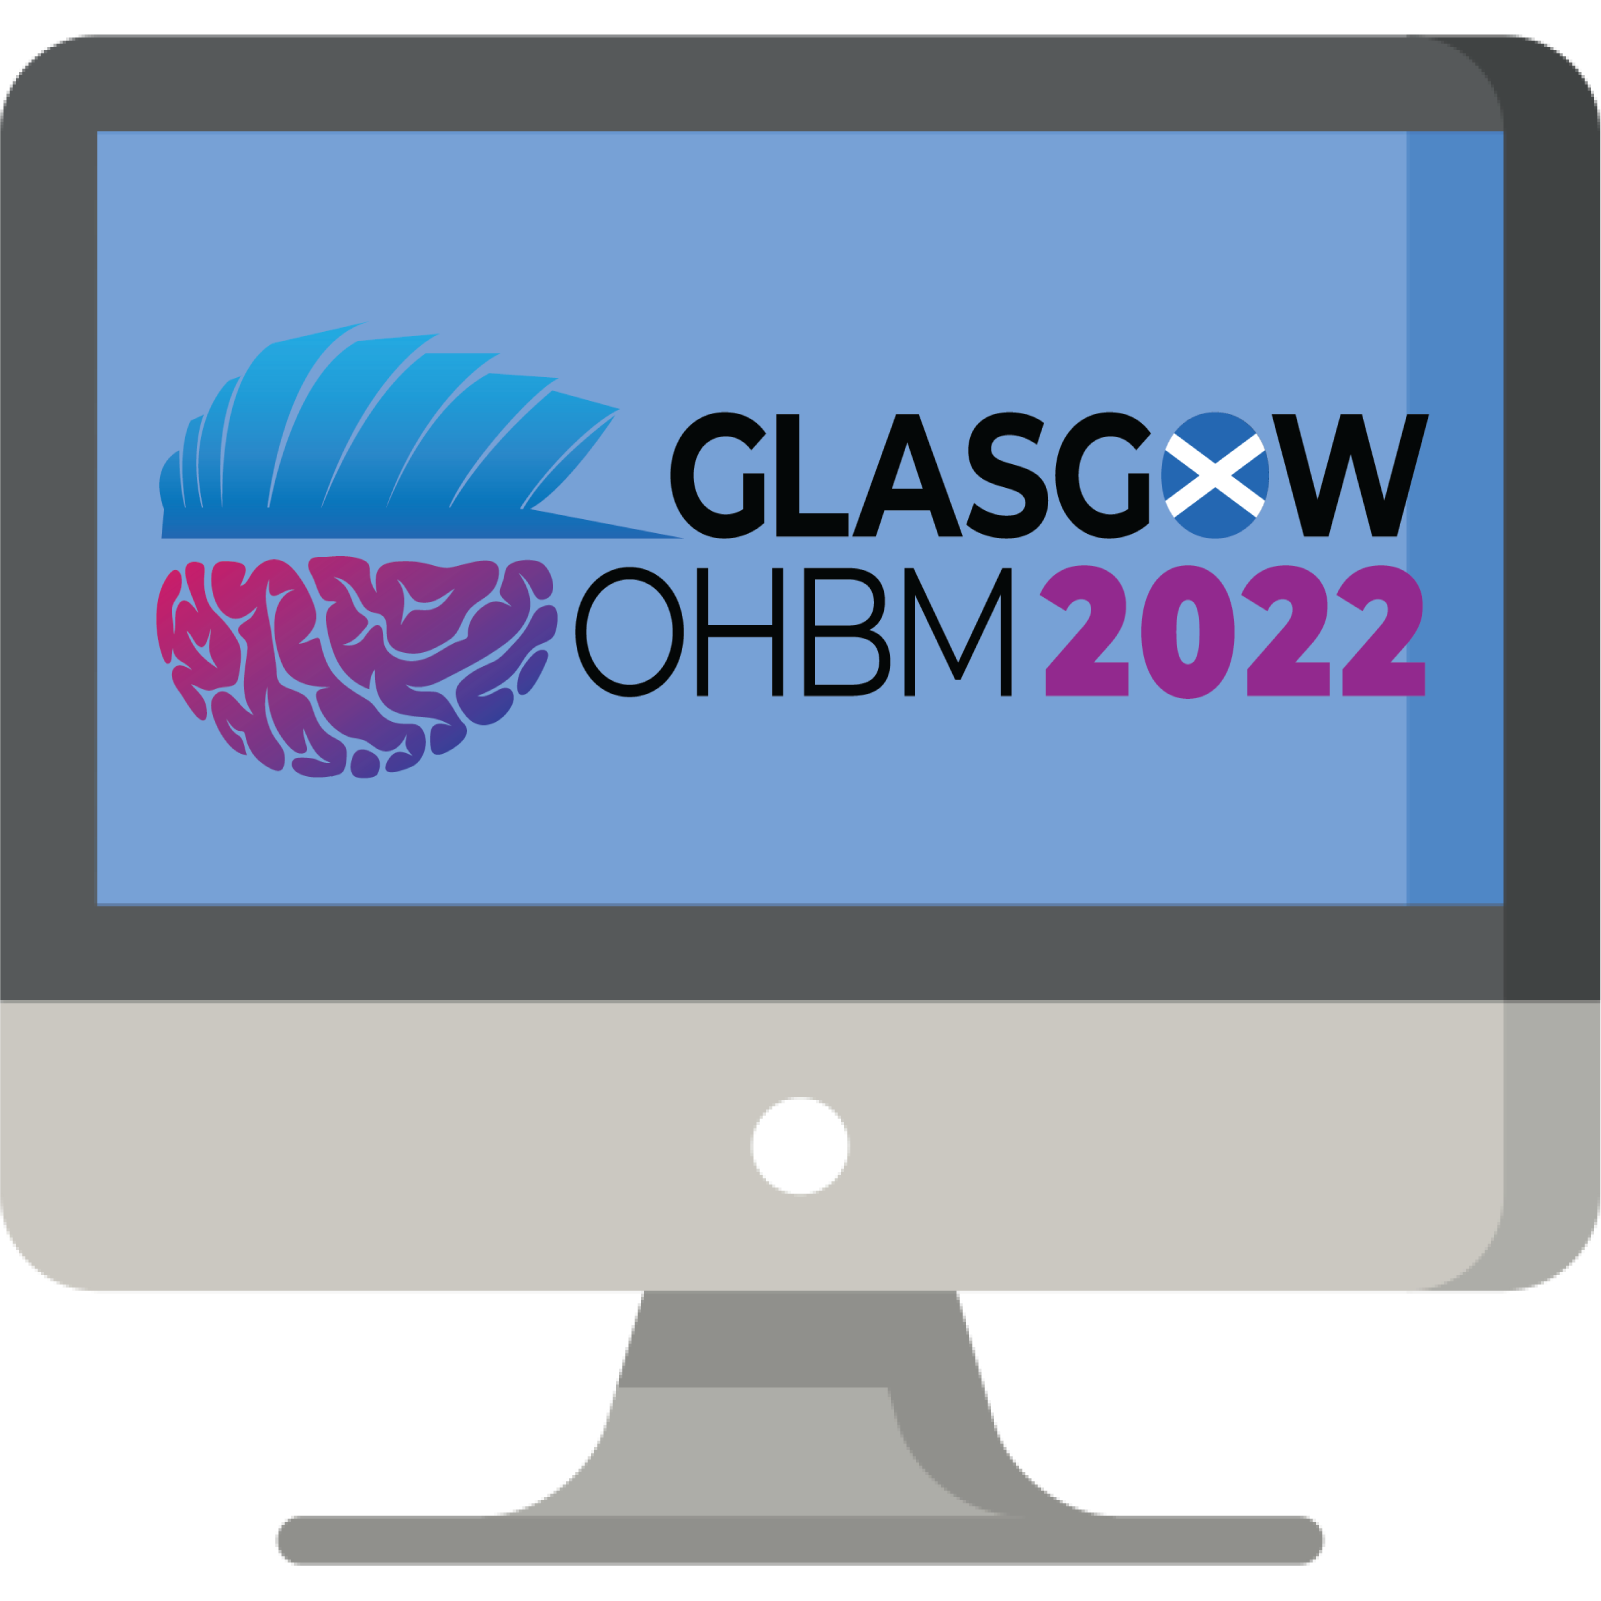 OHBM 2022 Annual Meeting Organization for Human Brain Mapping